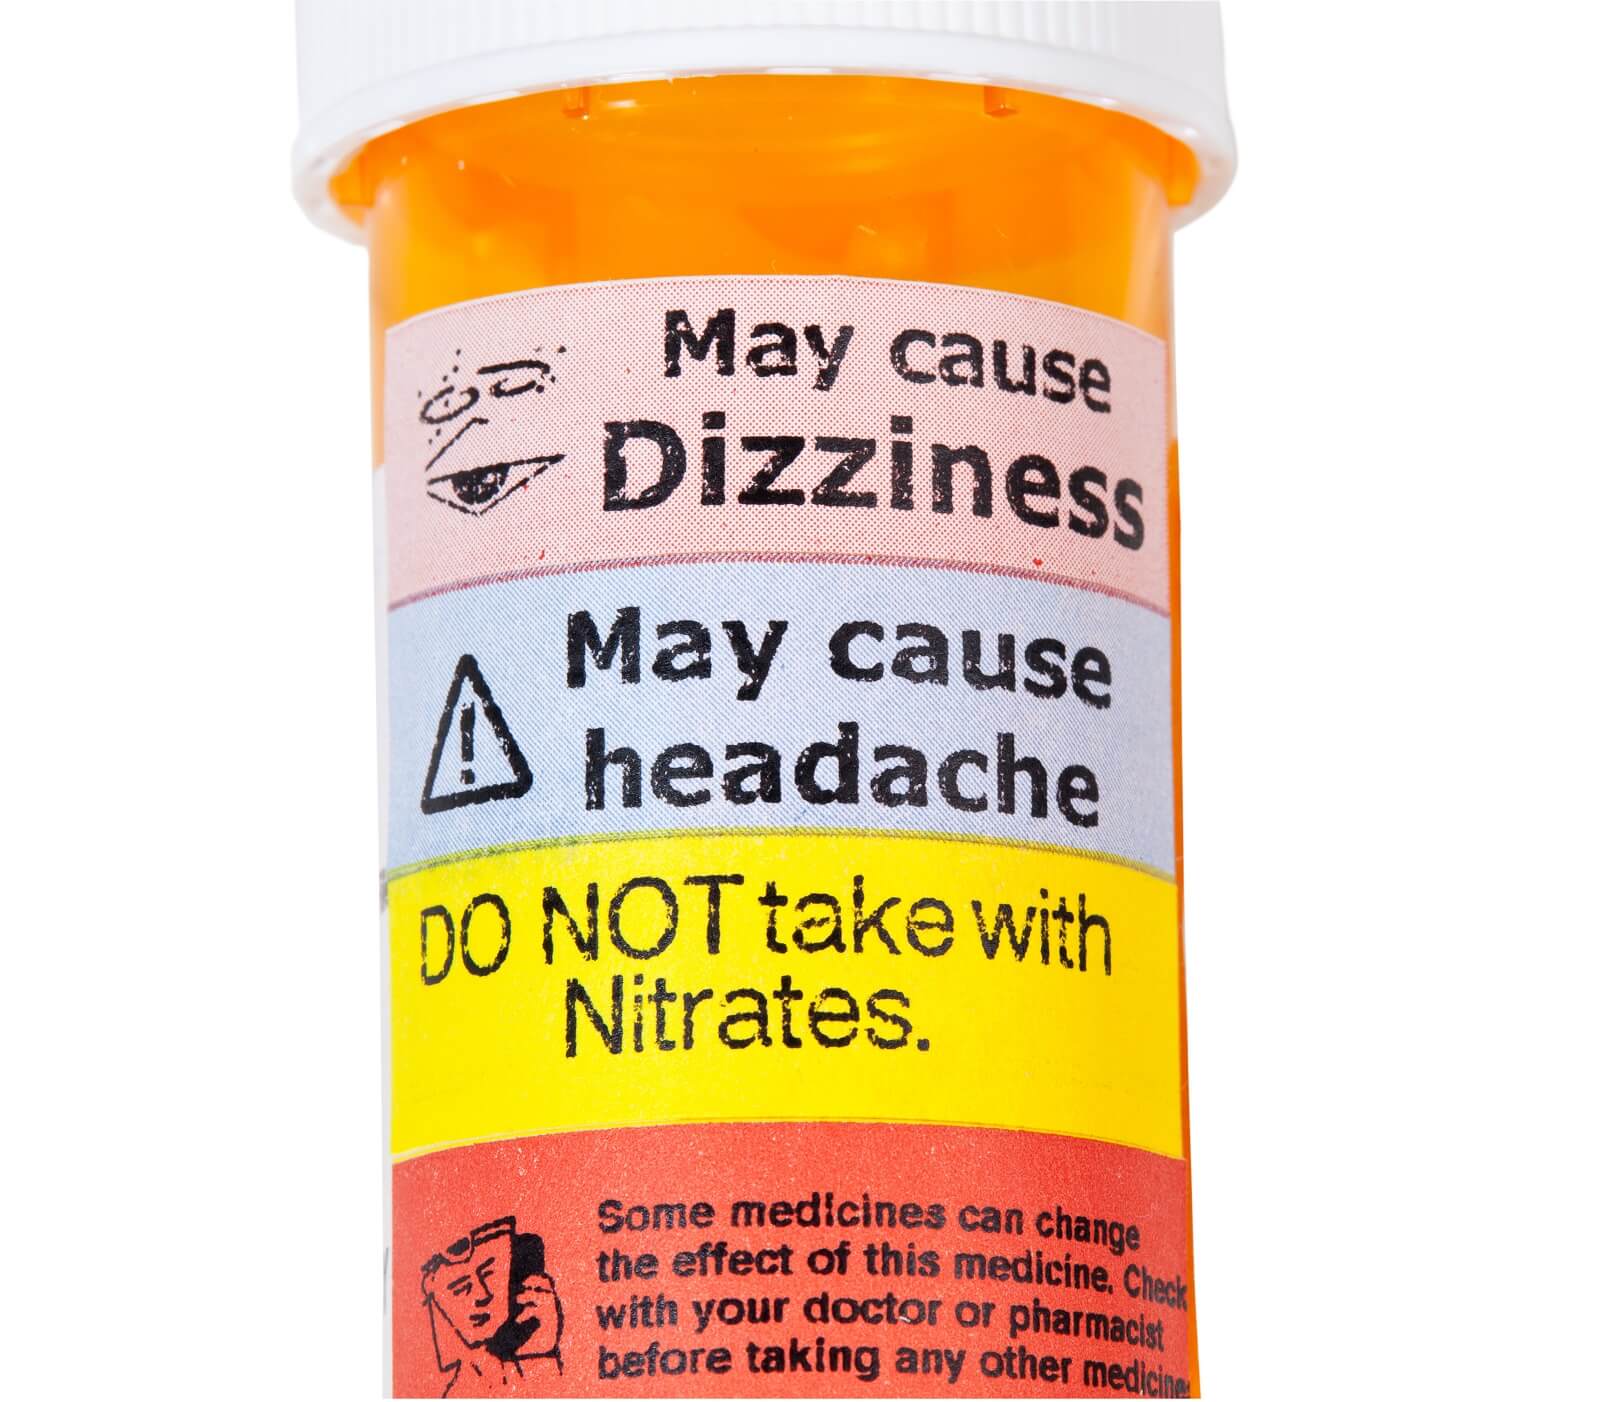 Warning signs on a bottle of prescription drugs.